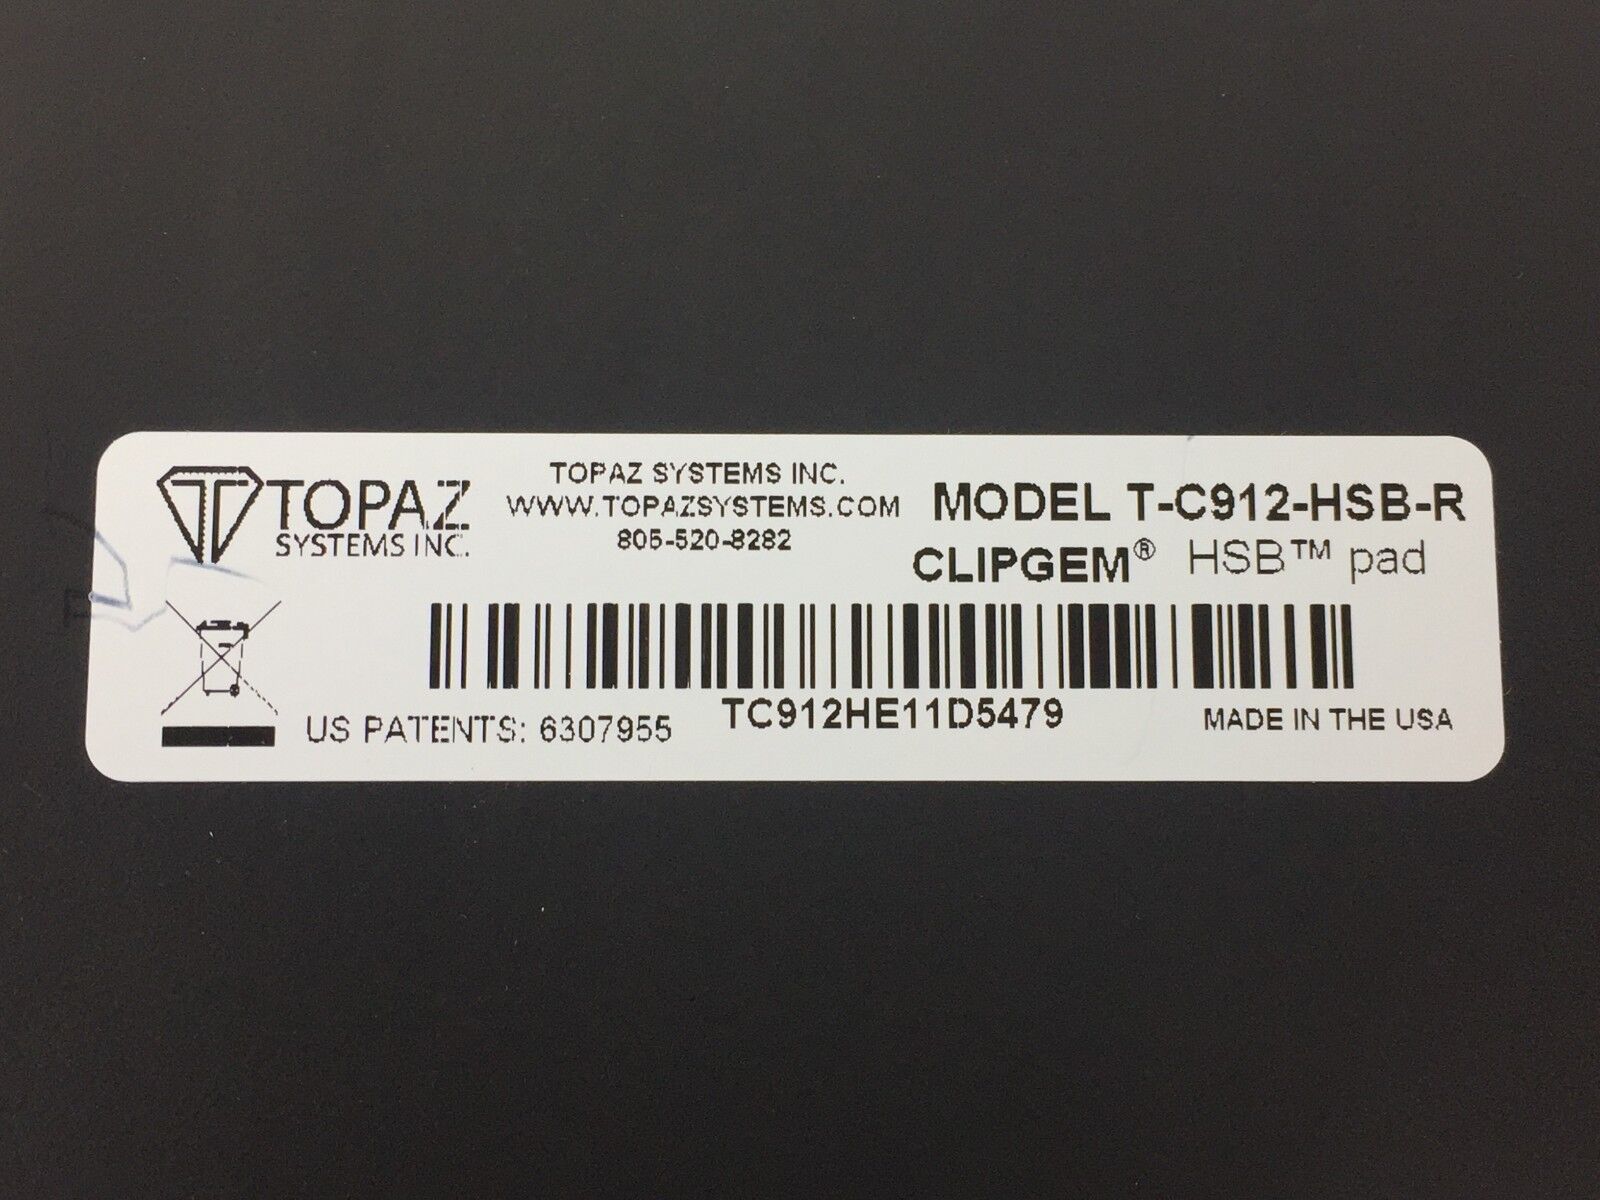 Topaz Systems T-C912-HSB-R Clipgem HSB Pad USB Stylus Not Included